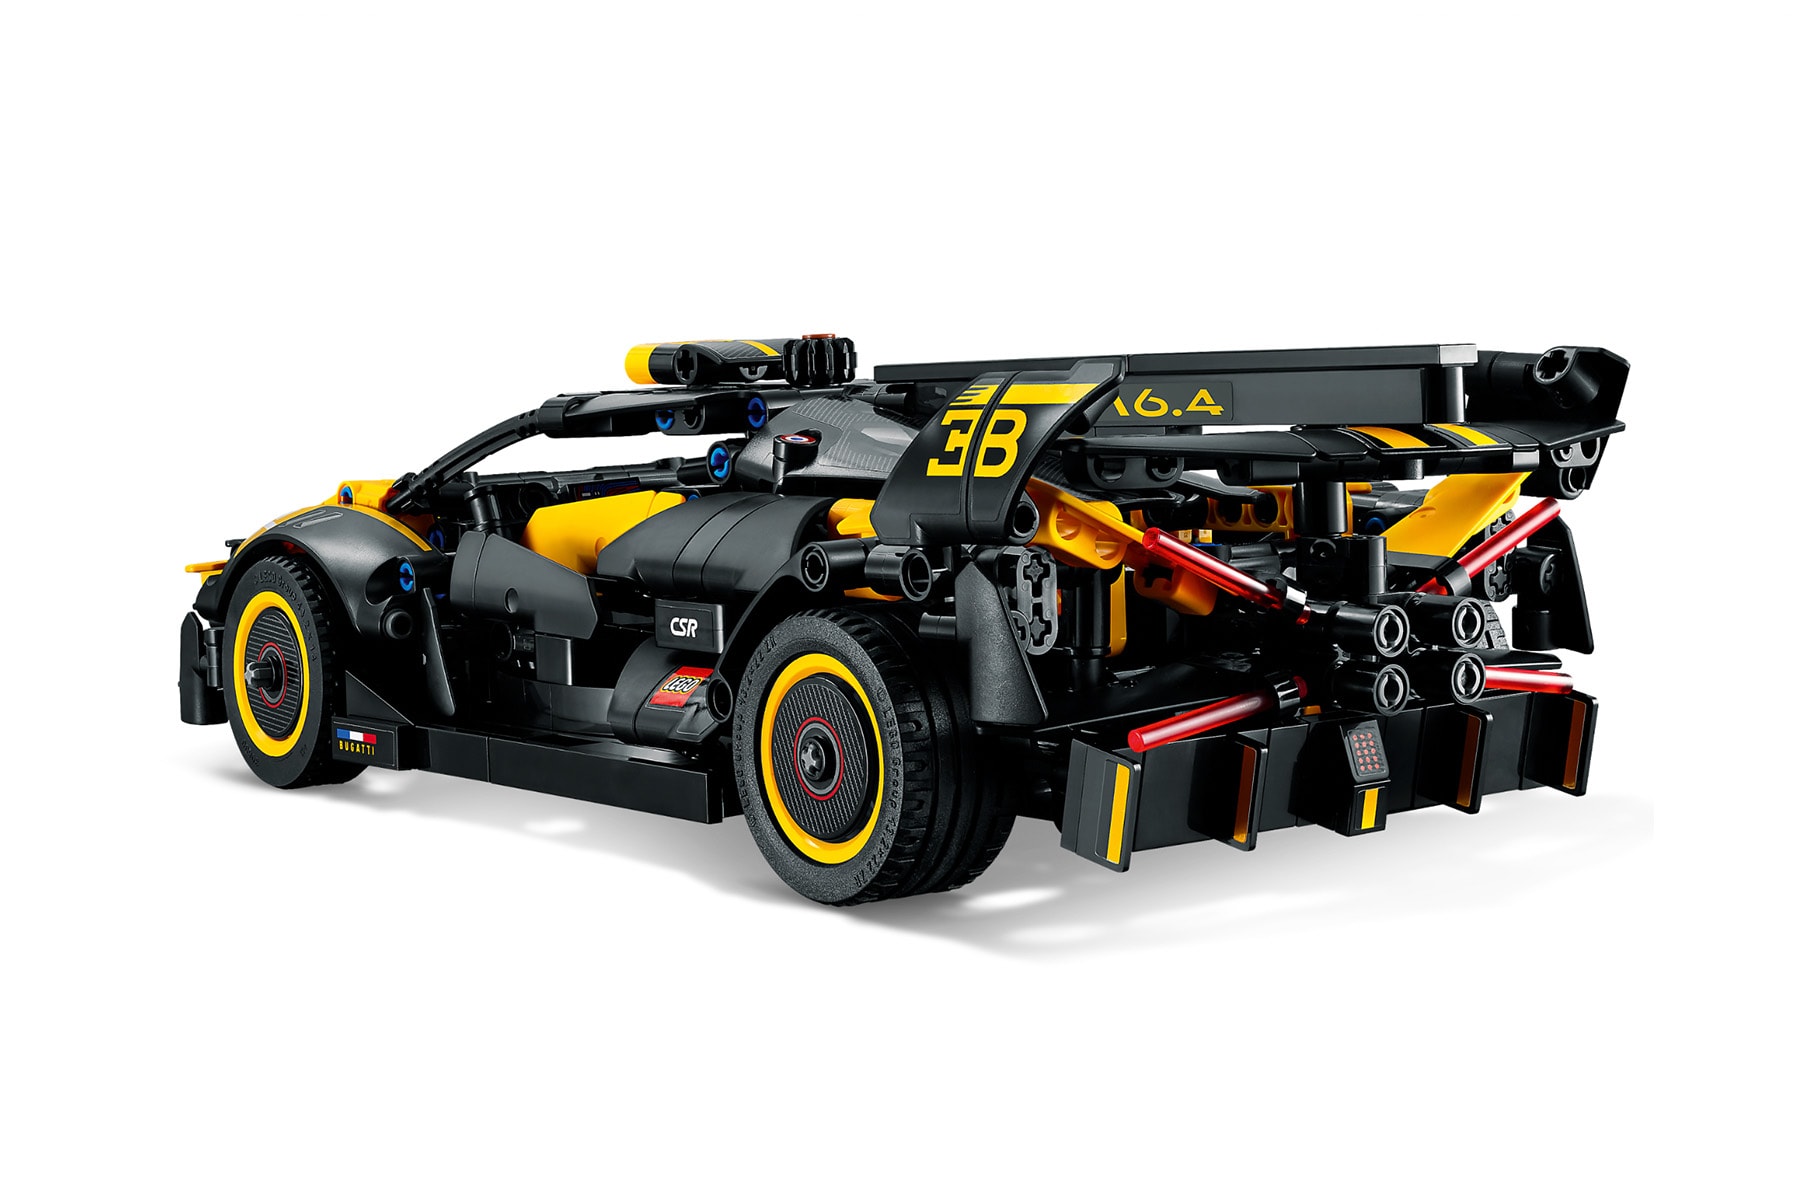 LEGO Technic 推出 Bugatti Bolide 全新積木模型